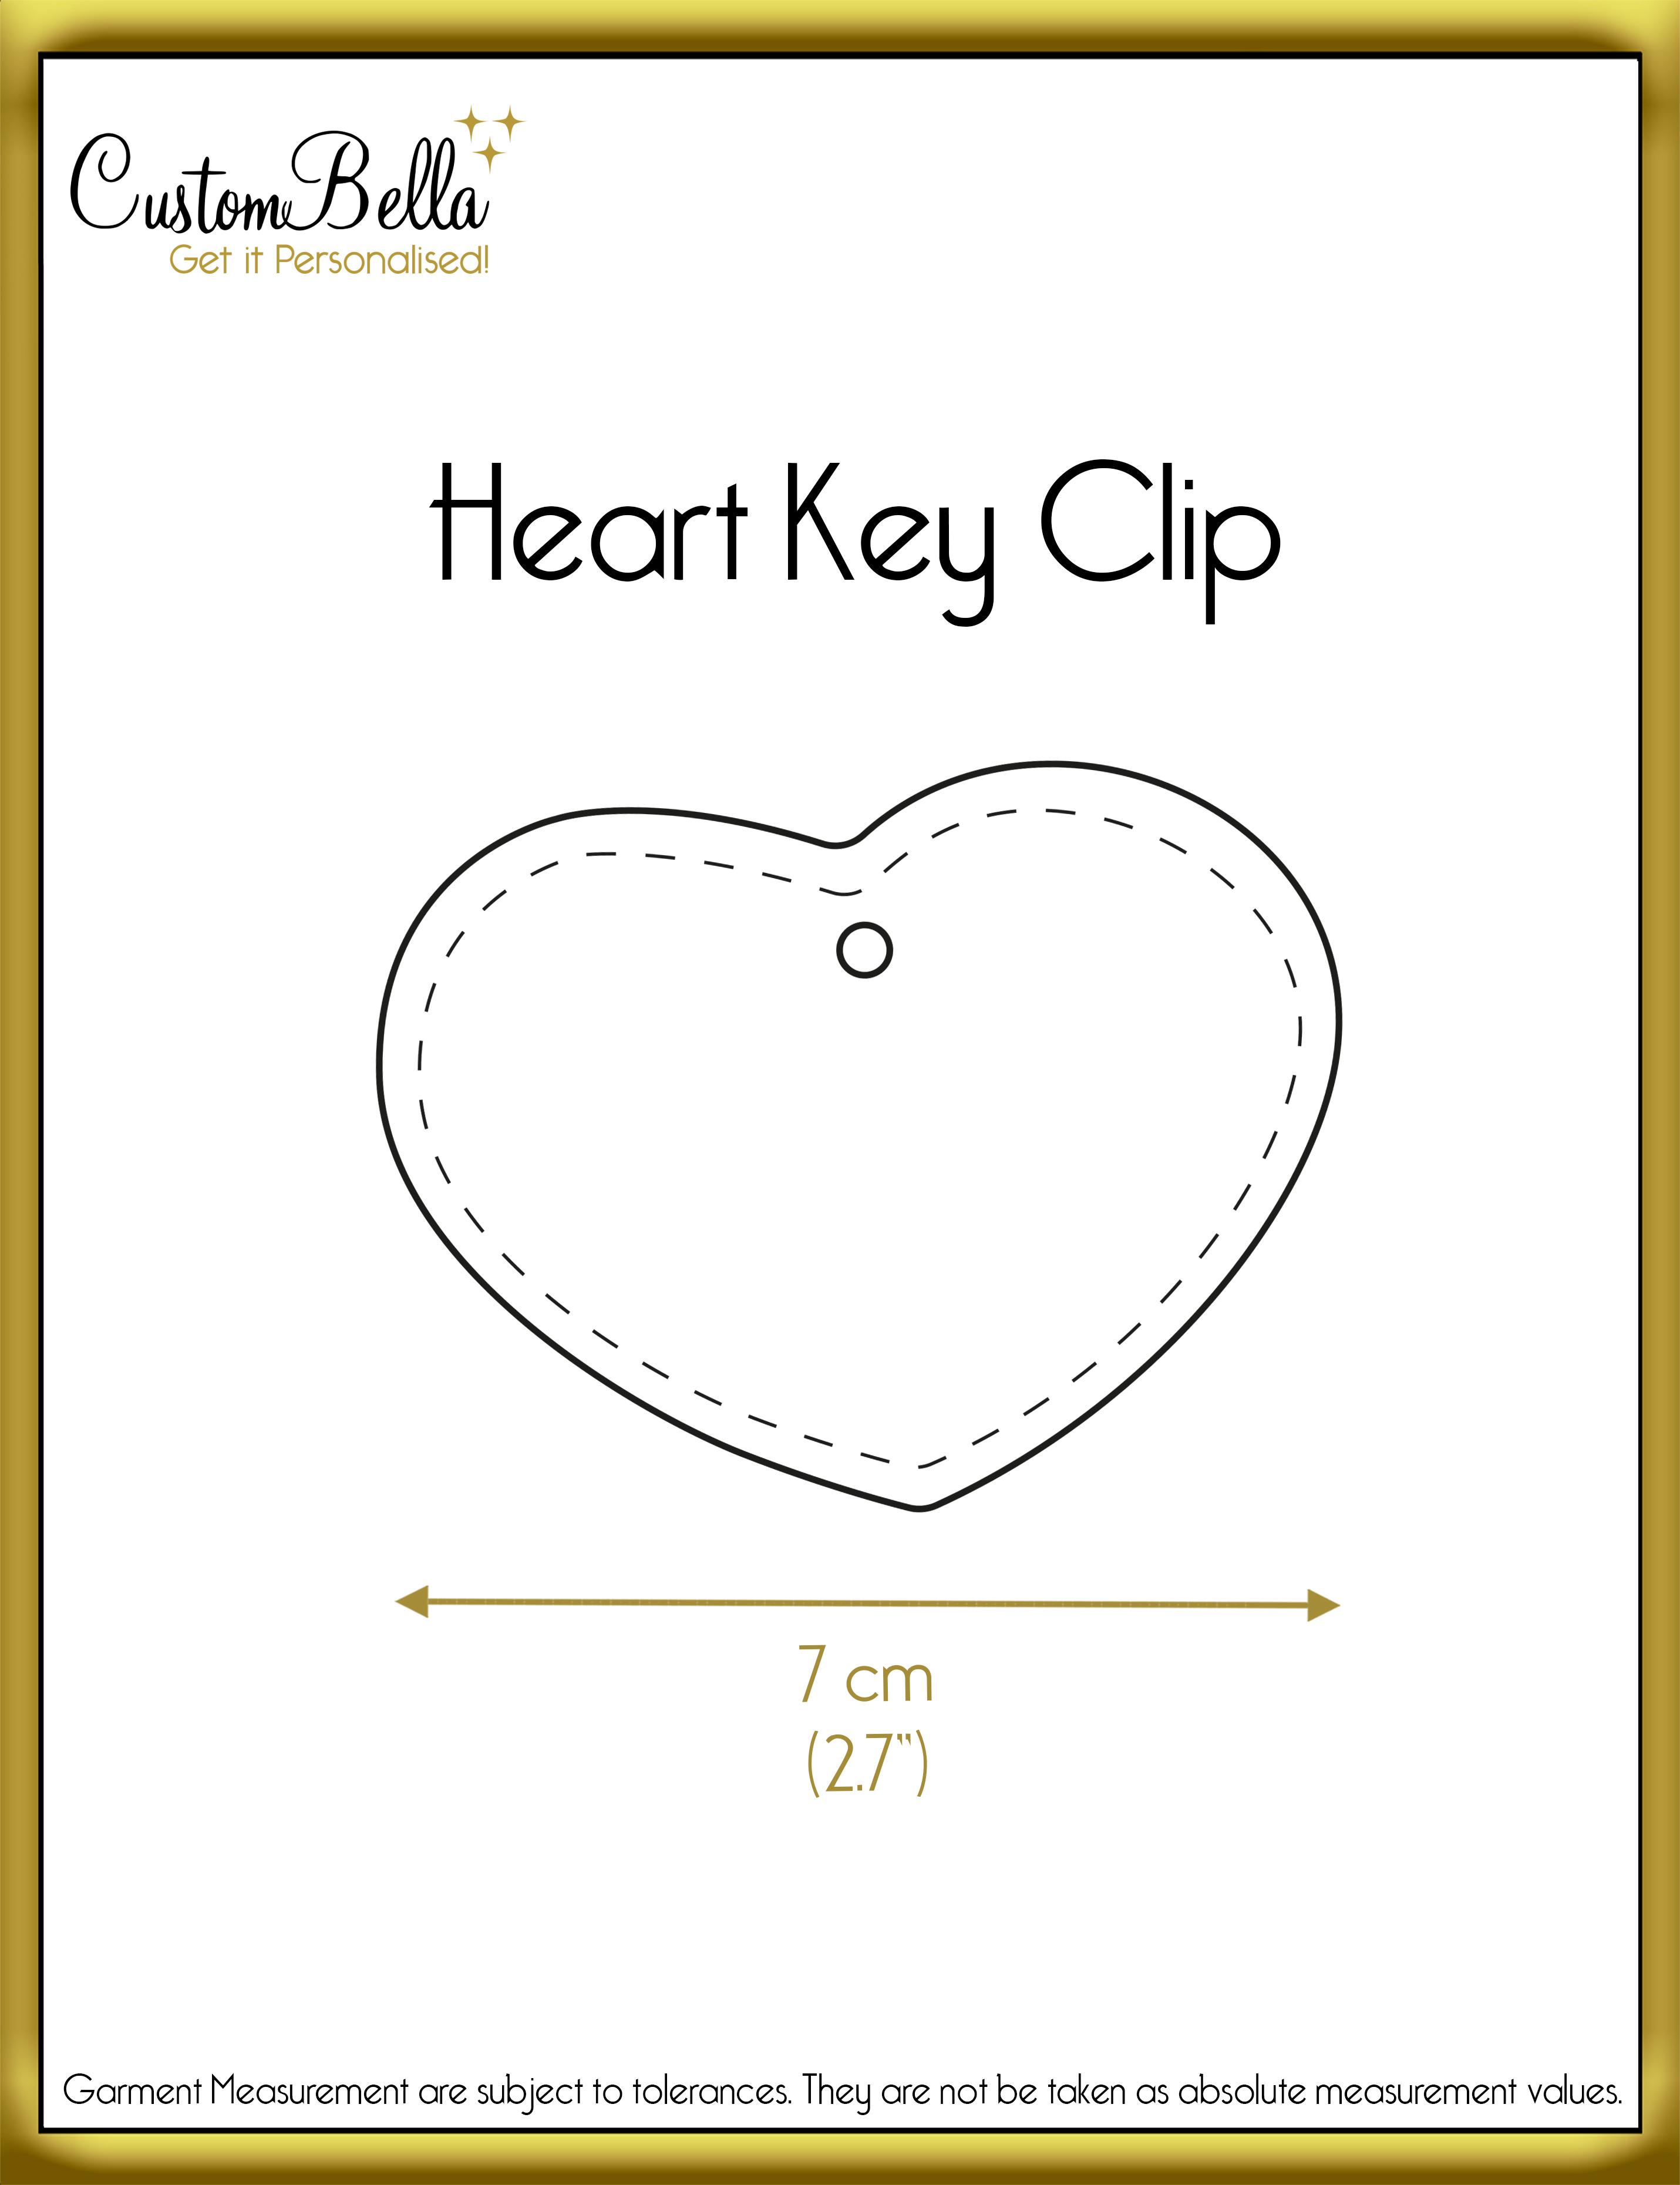 Printed heart key clip dimensions